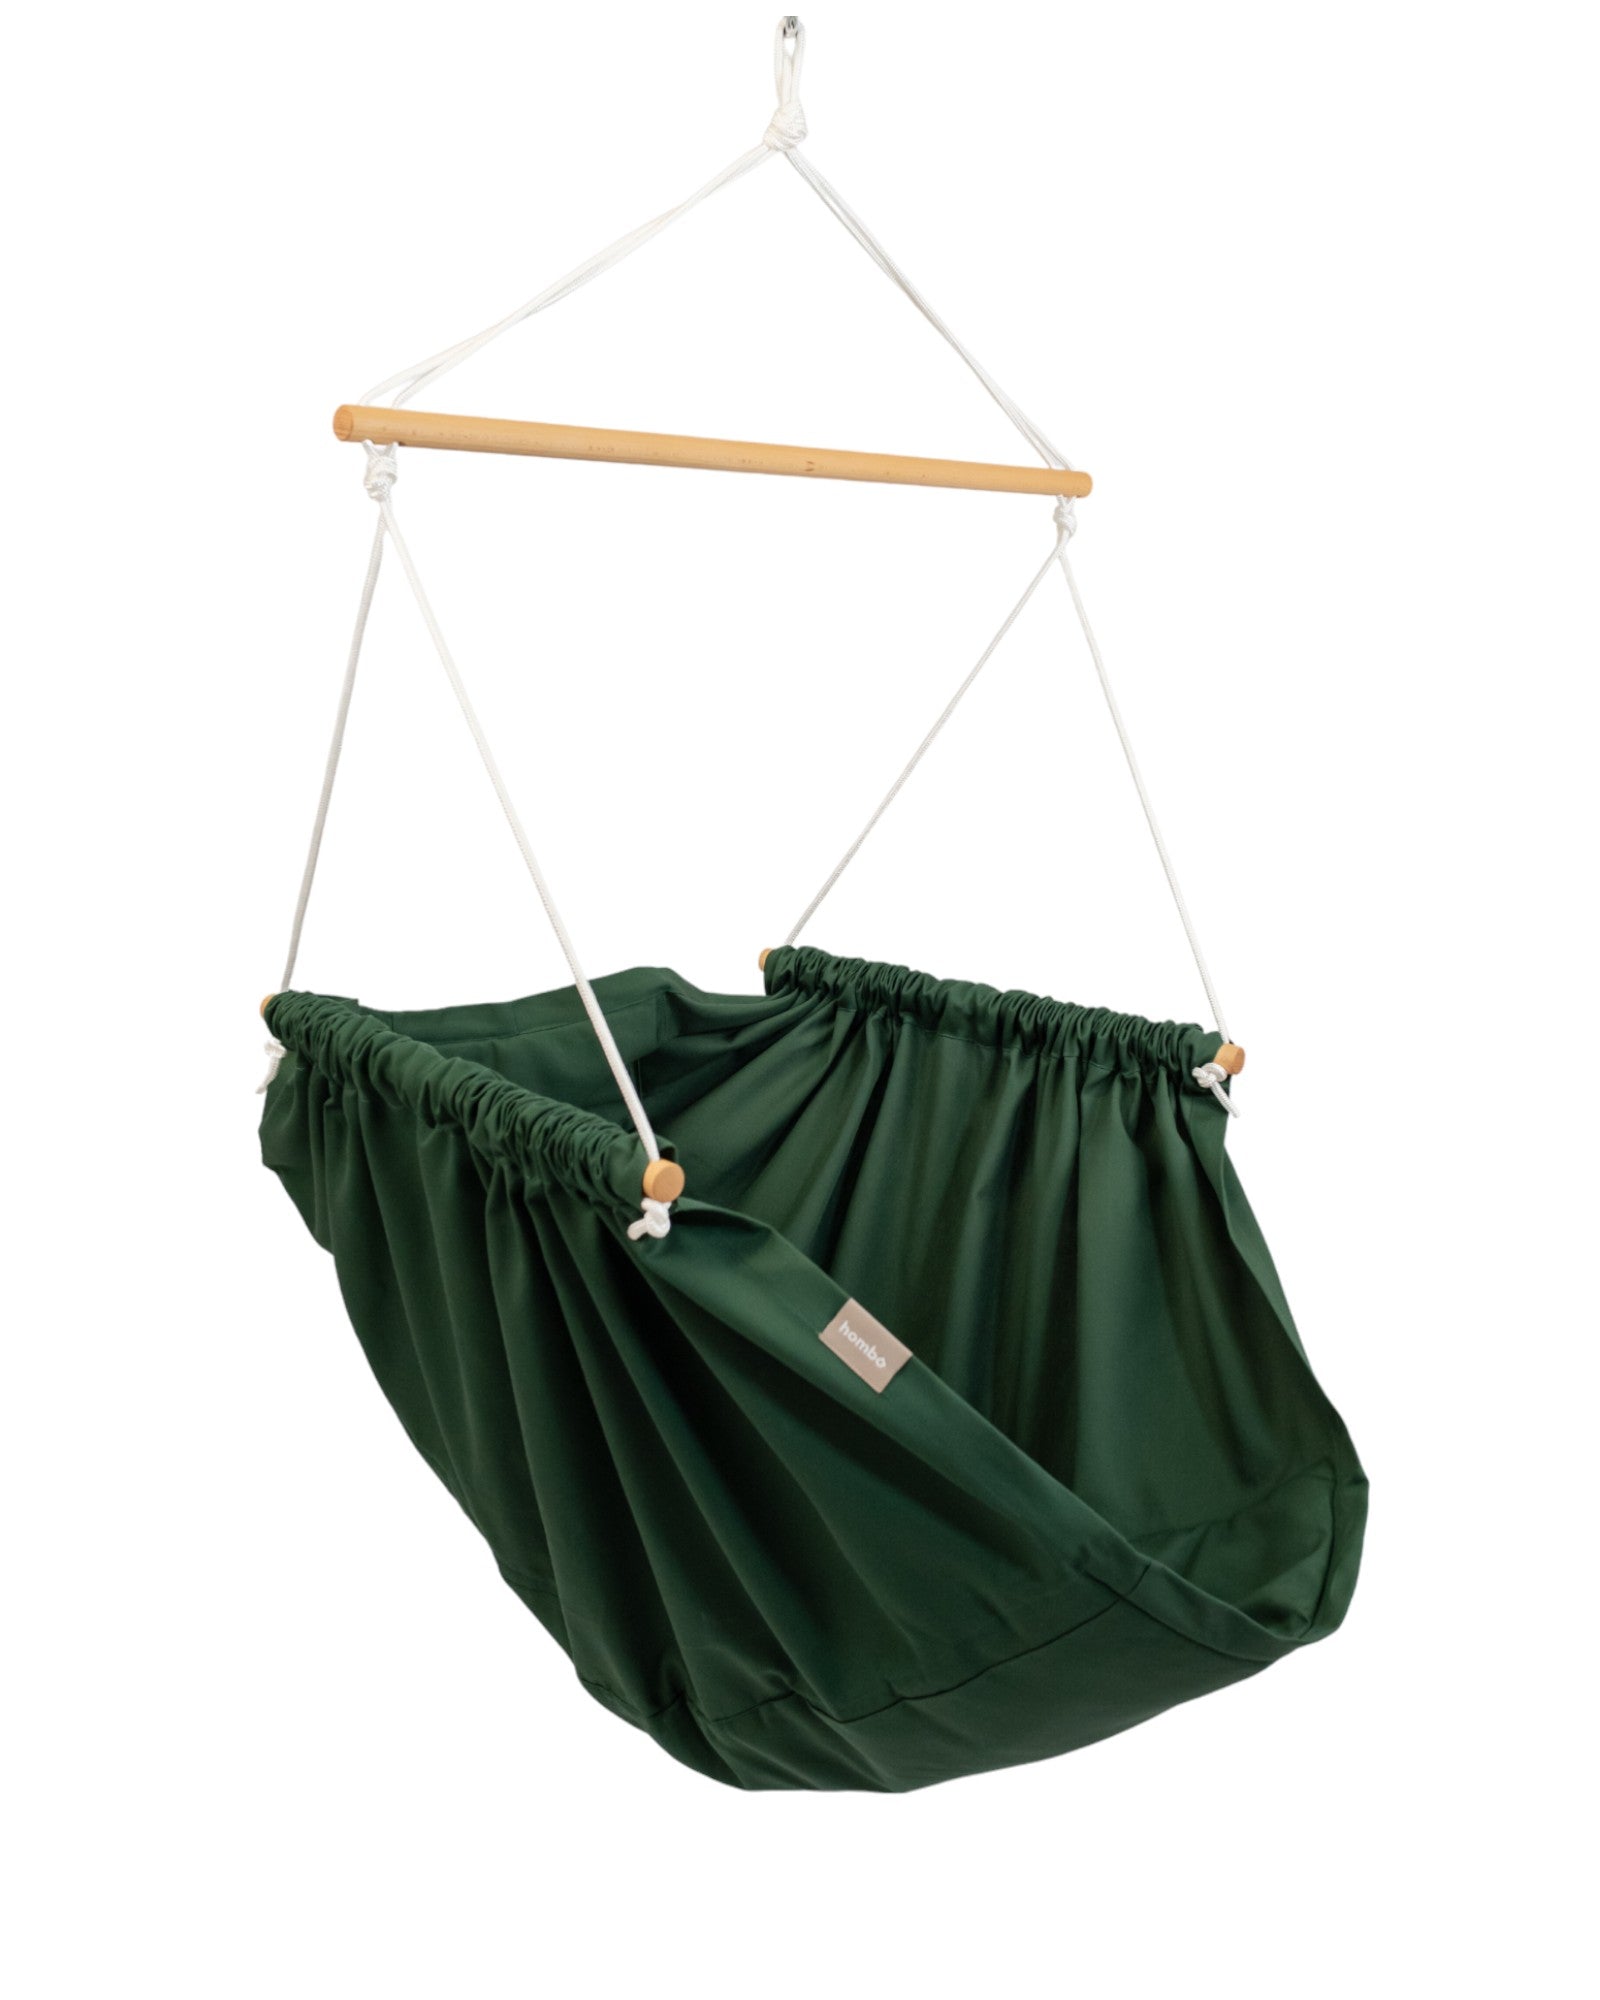 homba® zen hanging chair cotton green